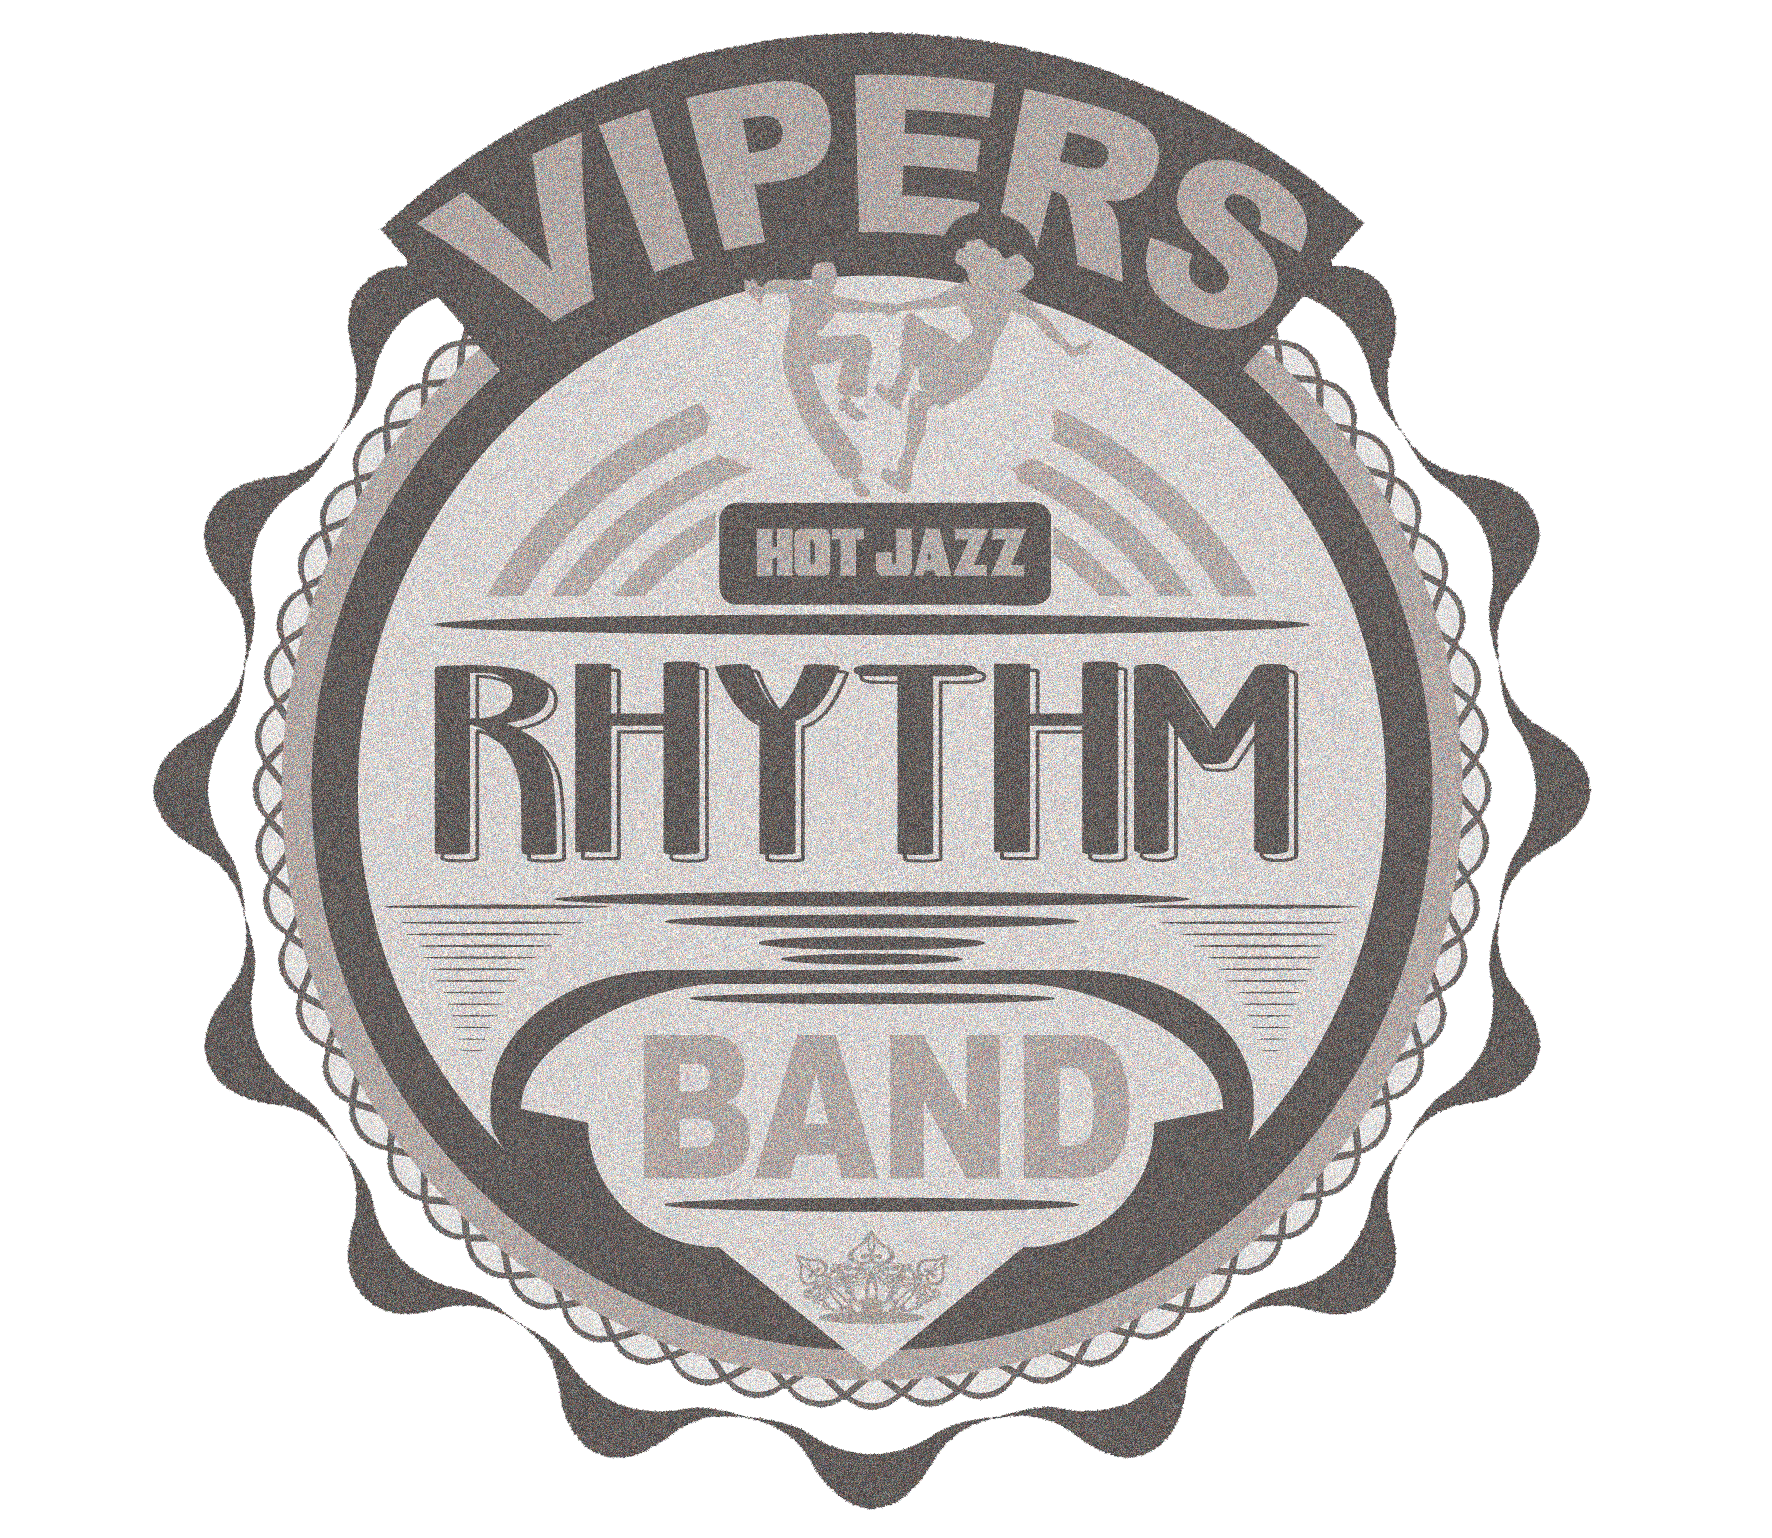 The Viper's Rhythm Band